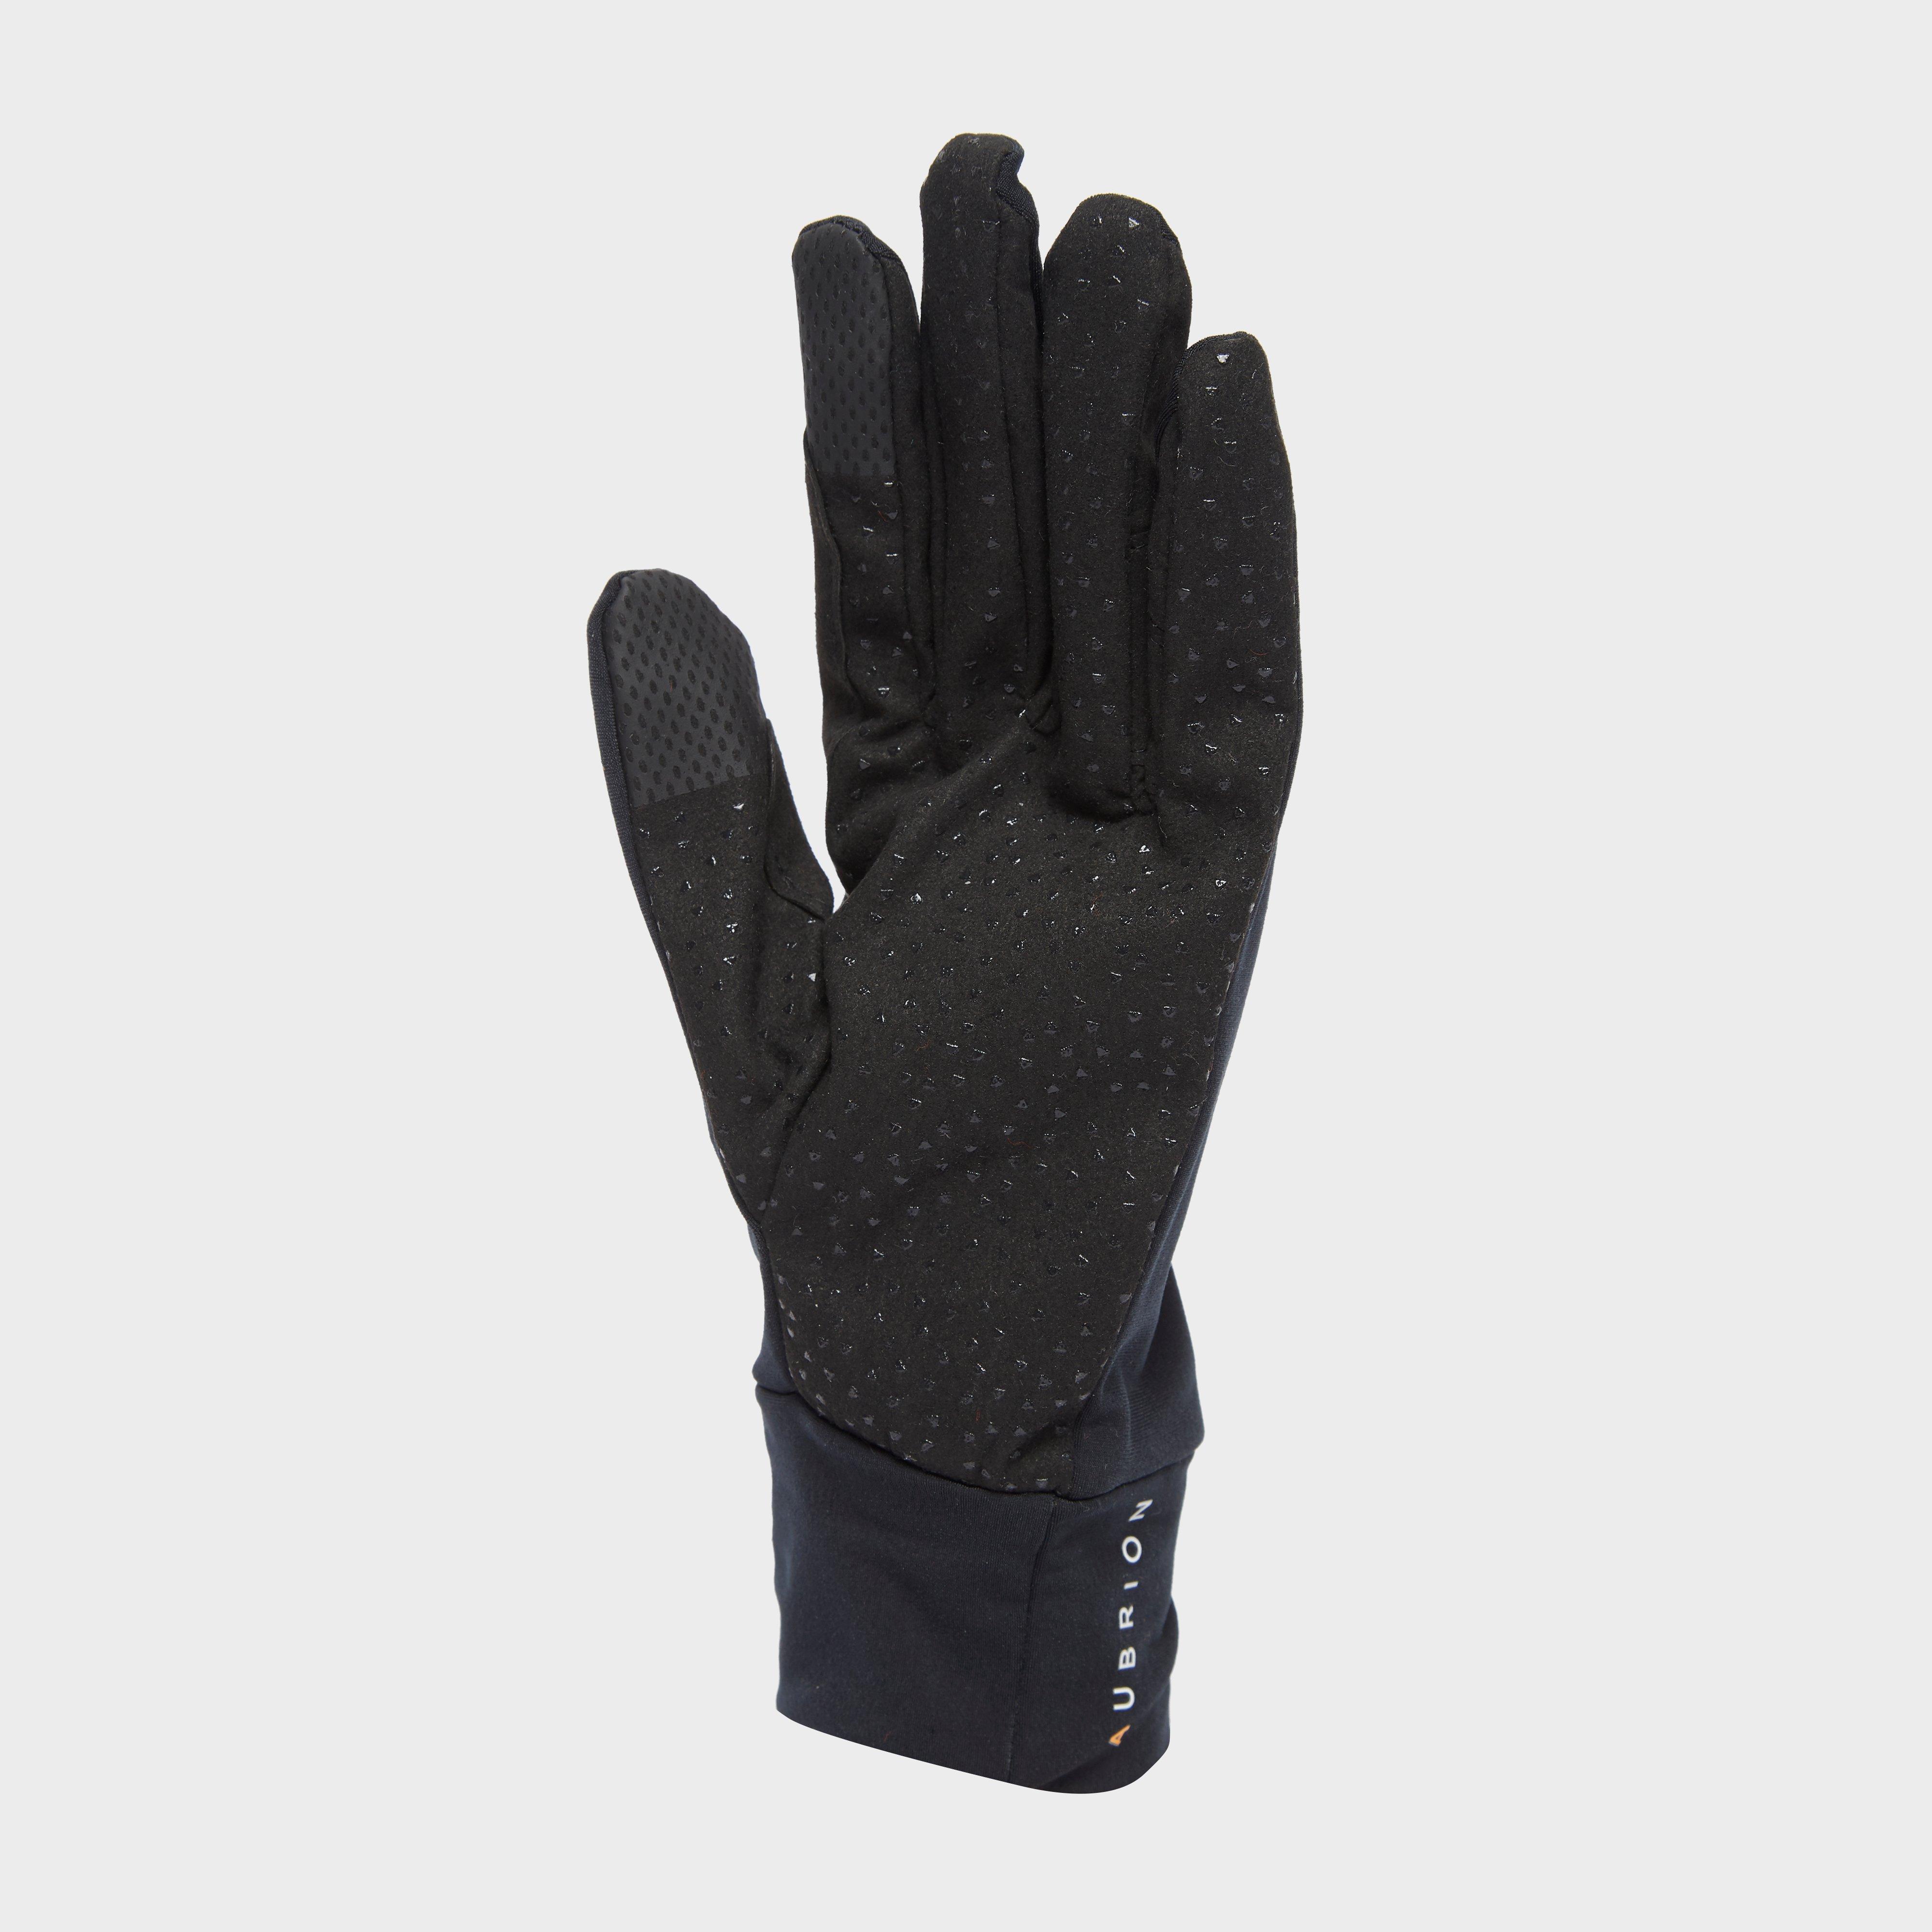 Shires Aubrion Comfort Grip Gloves Review